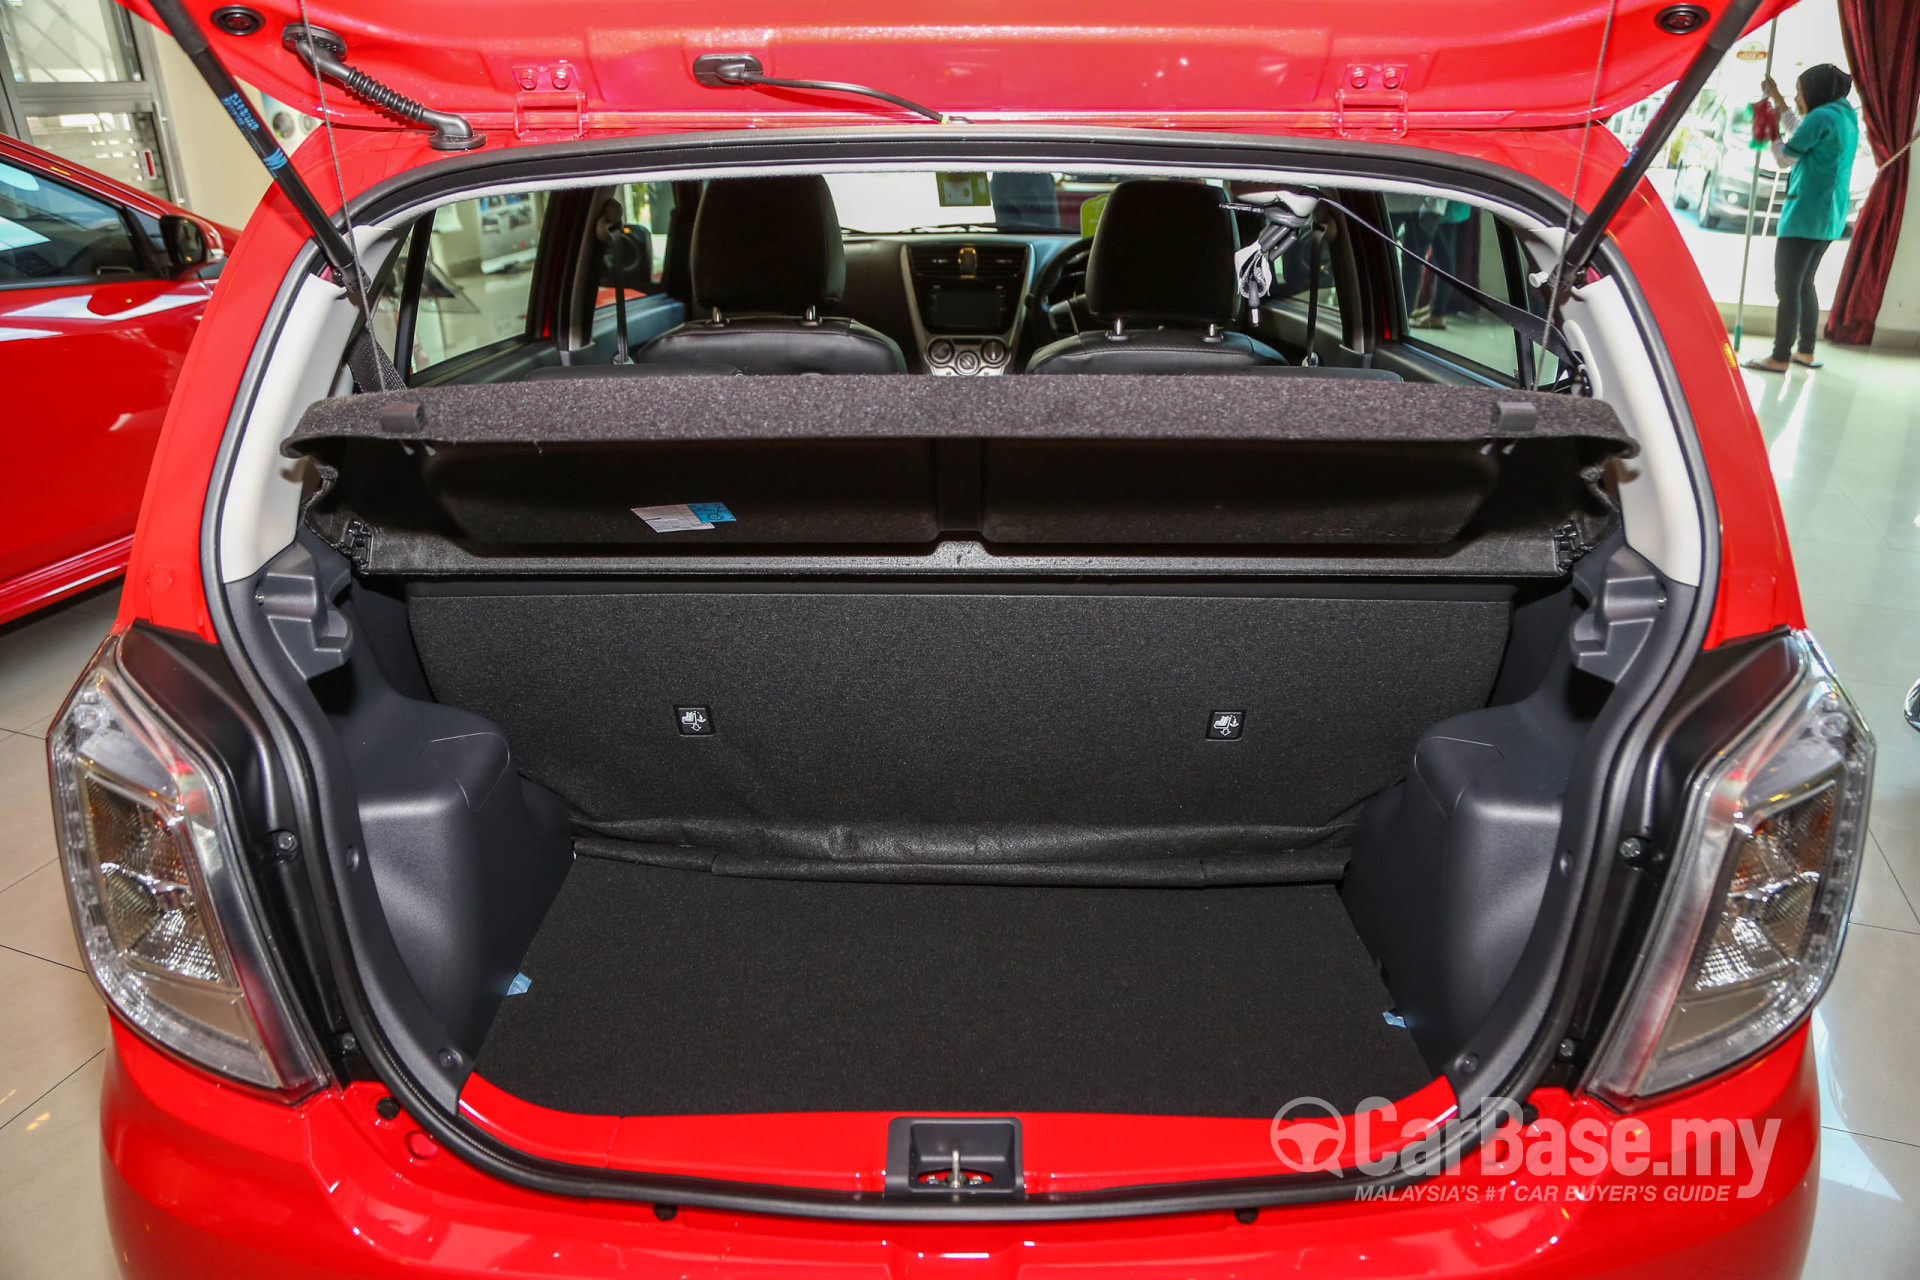 Perodua Axia Mk1 Facelift (2017) Interior Image #35107 in 